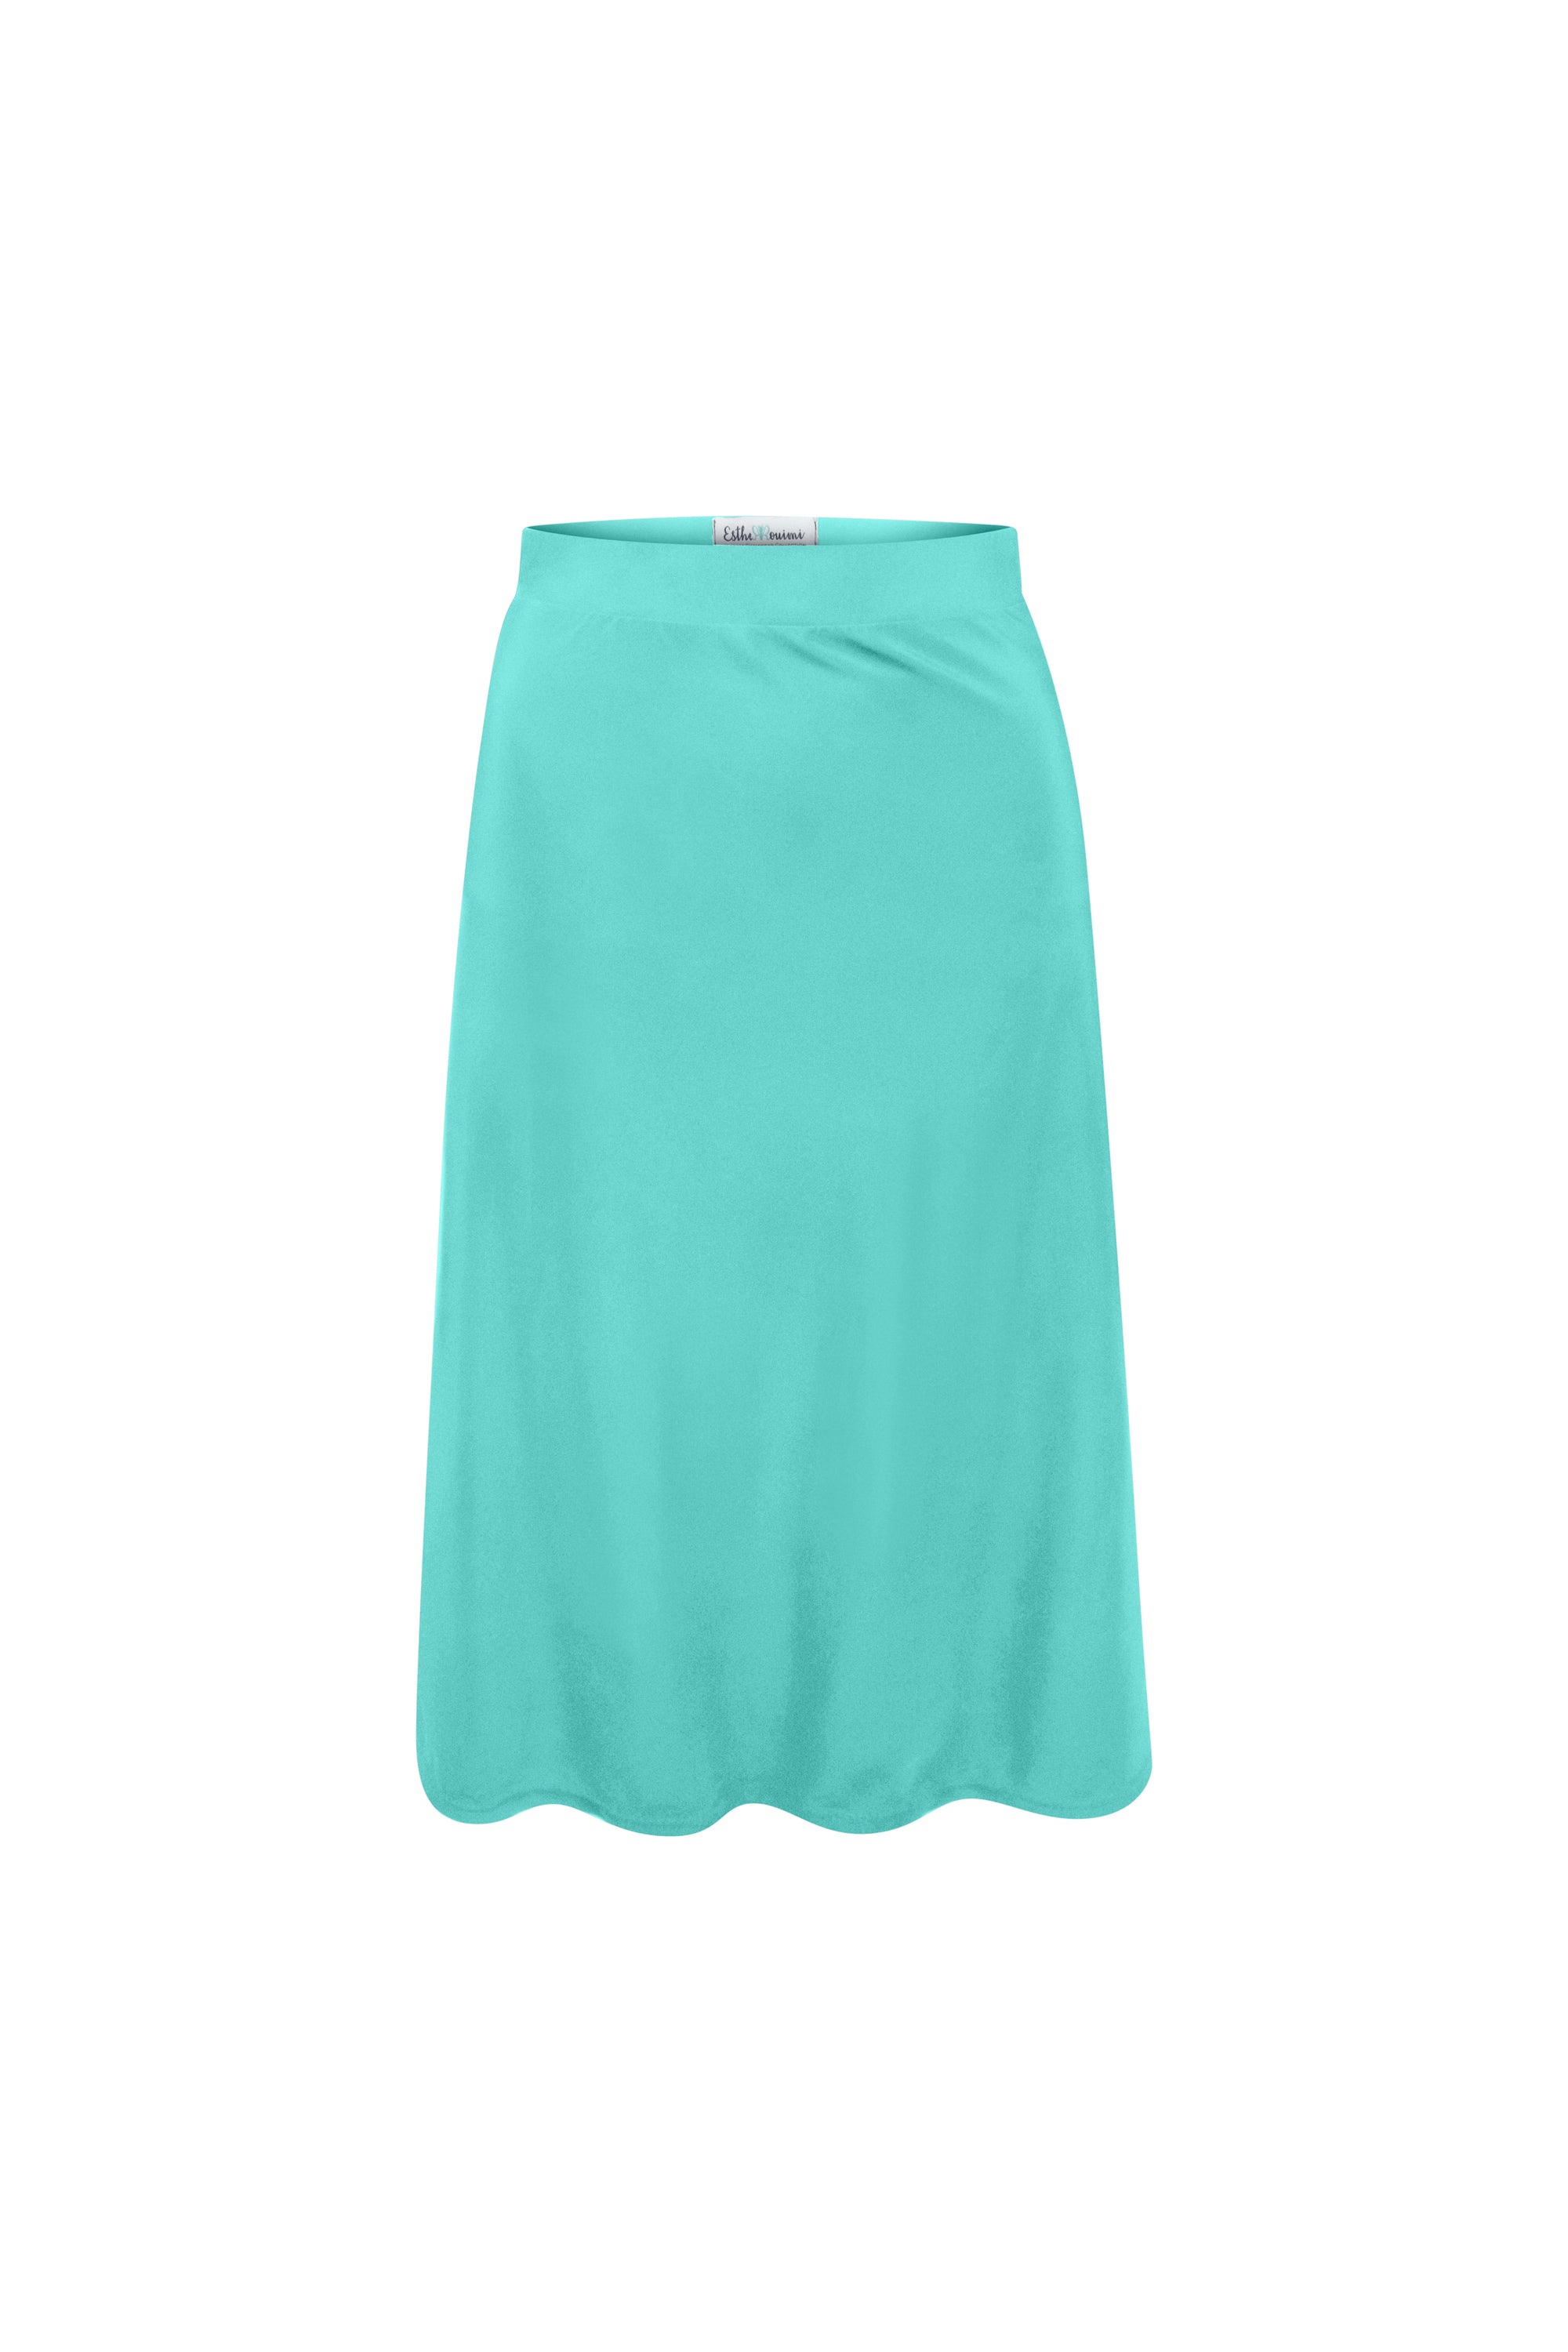 Tampa A-Line Skirt